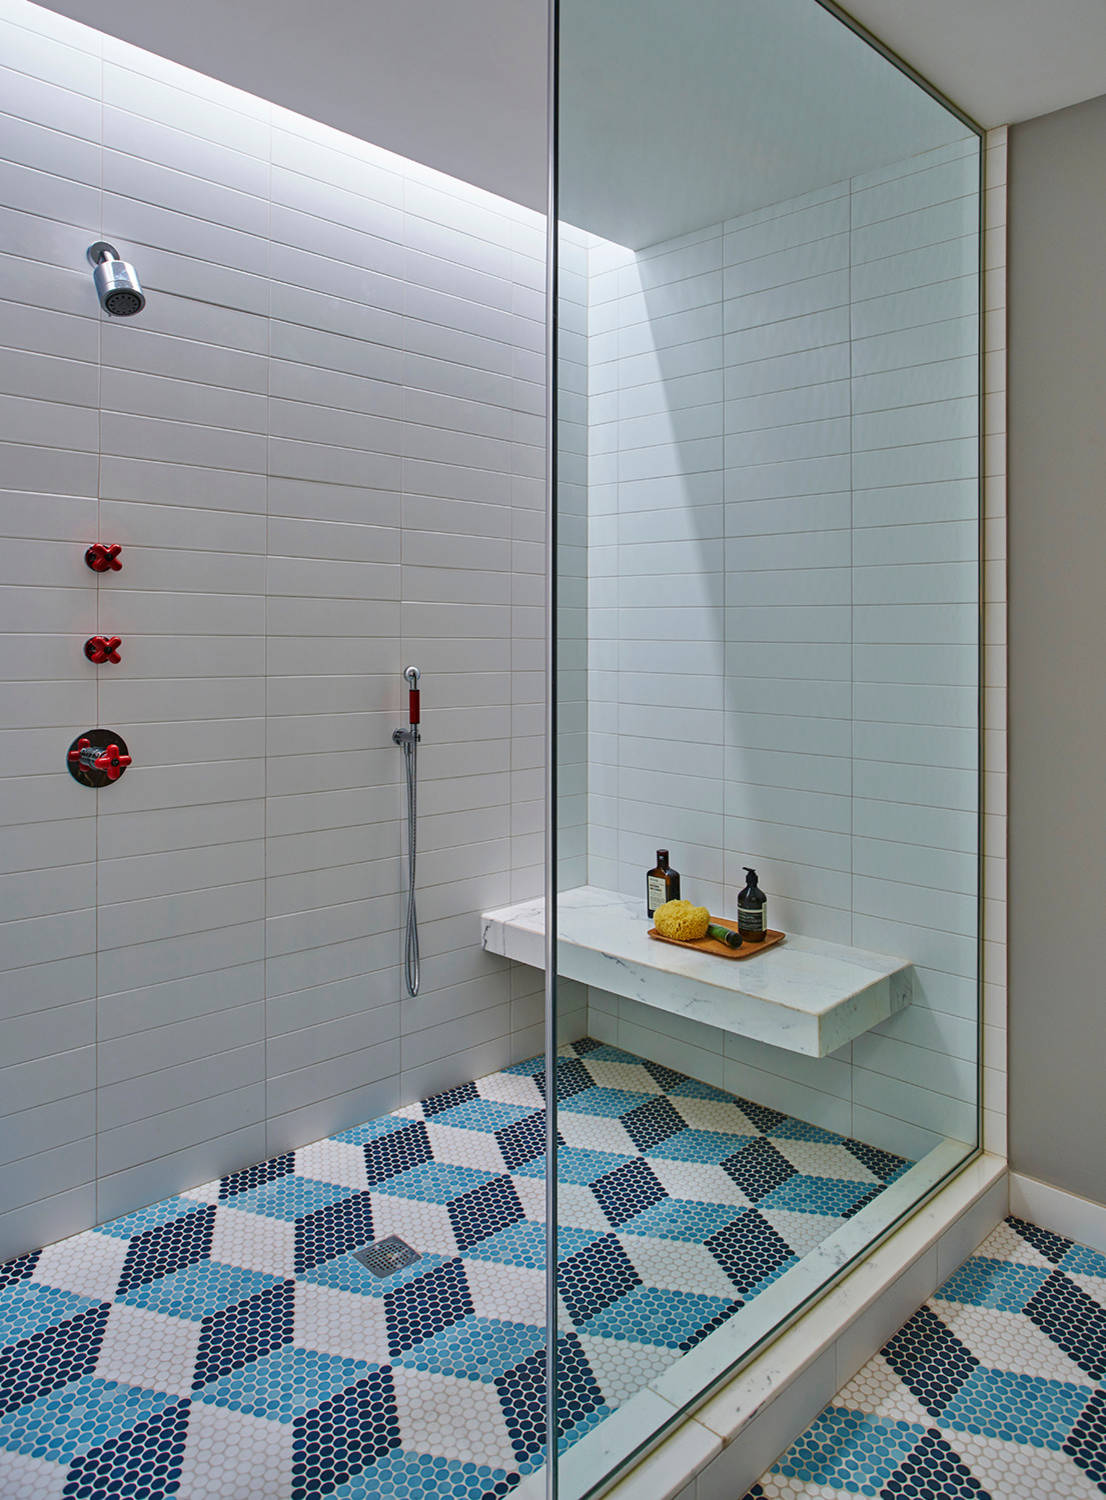 75 Beautiful Mosaic Tile Floor Bathroom, Mosaic Tile Bathroom Floor